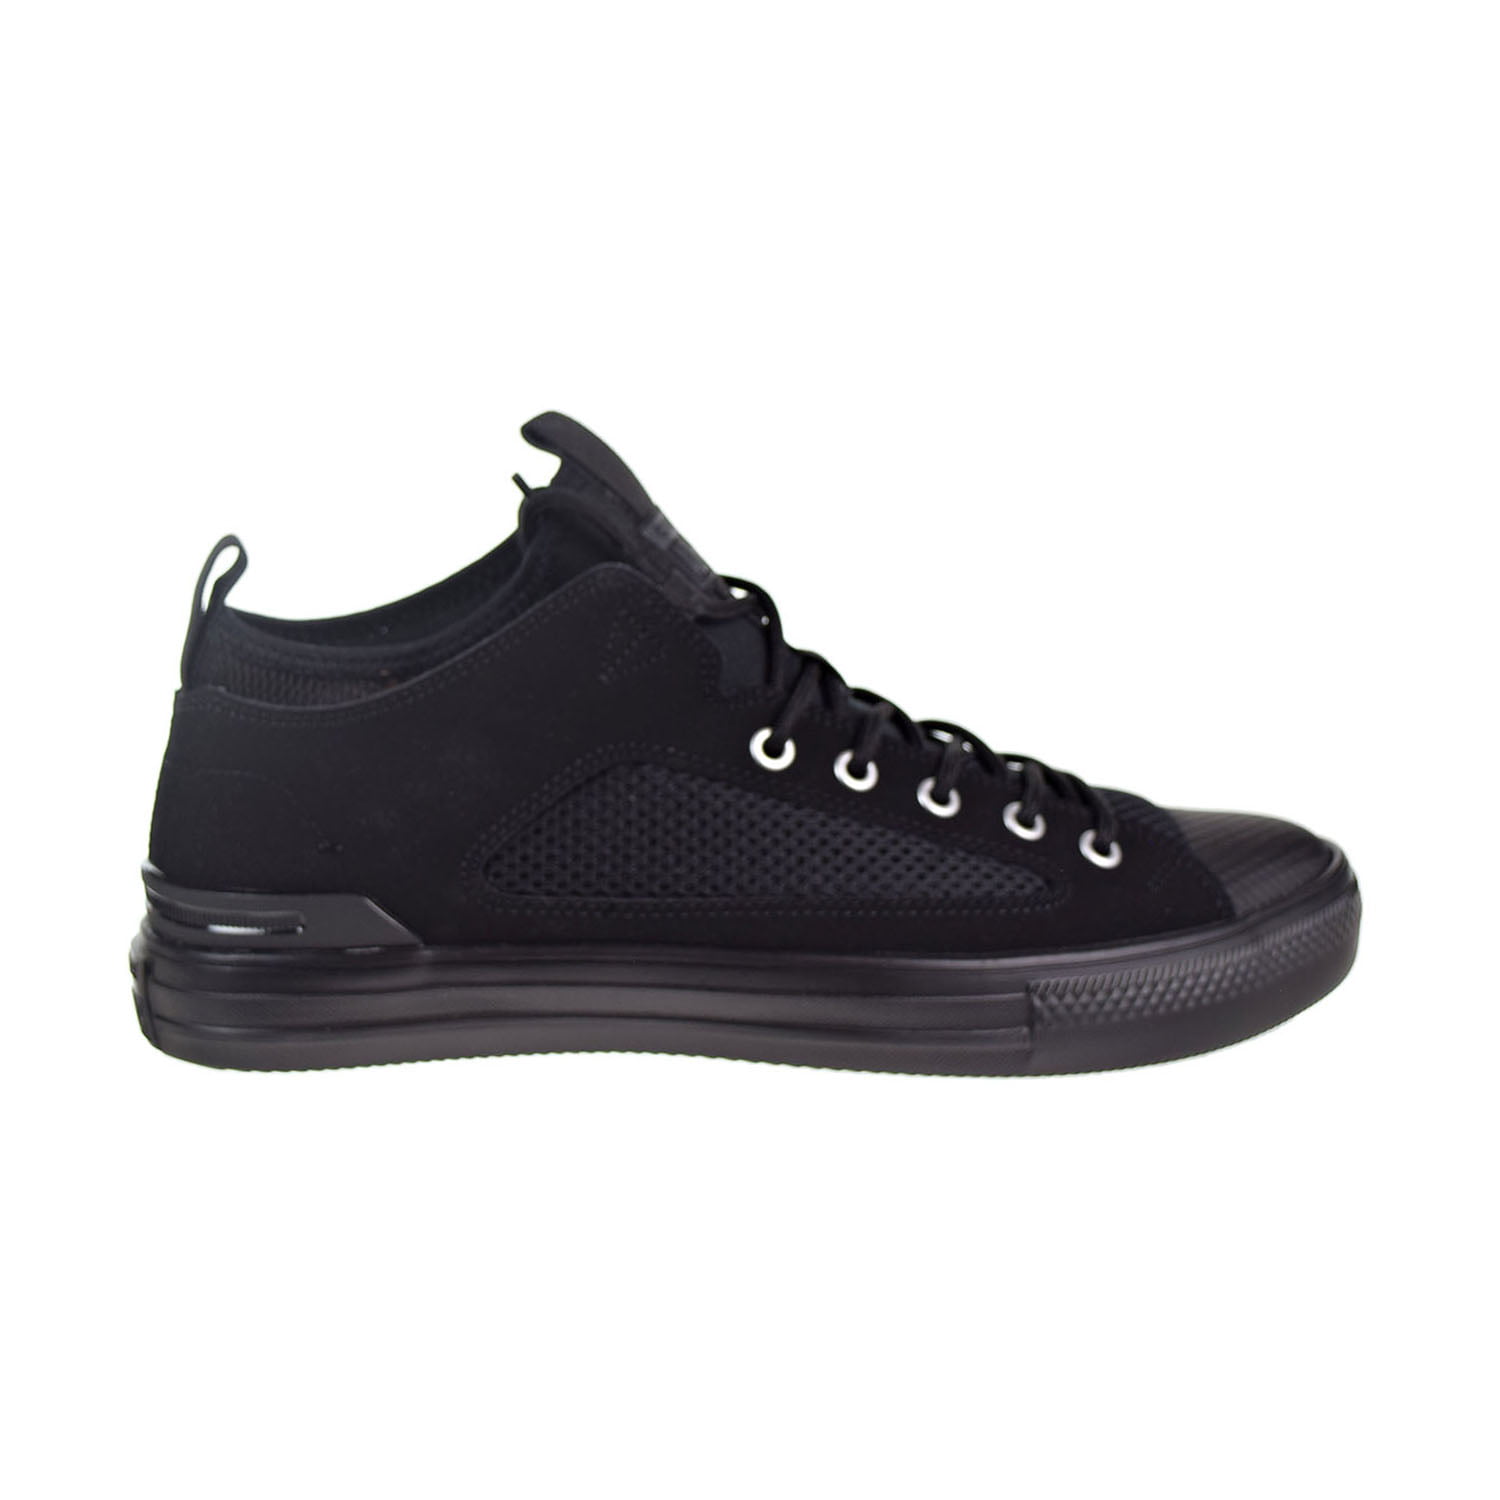 Converse - Converse Chuck Taylor All Star Ultra Ox Men's/Big Kids' Shoes  Black-Surplus 161477c - Walmart.com - Walmart.com